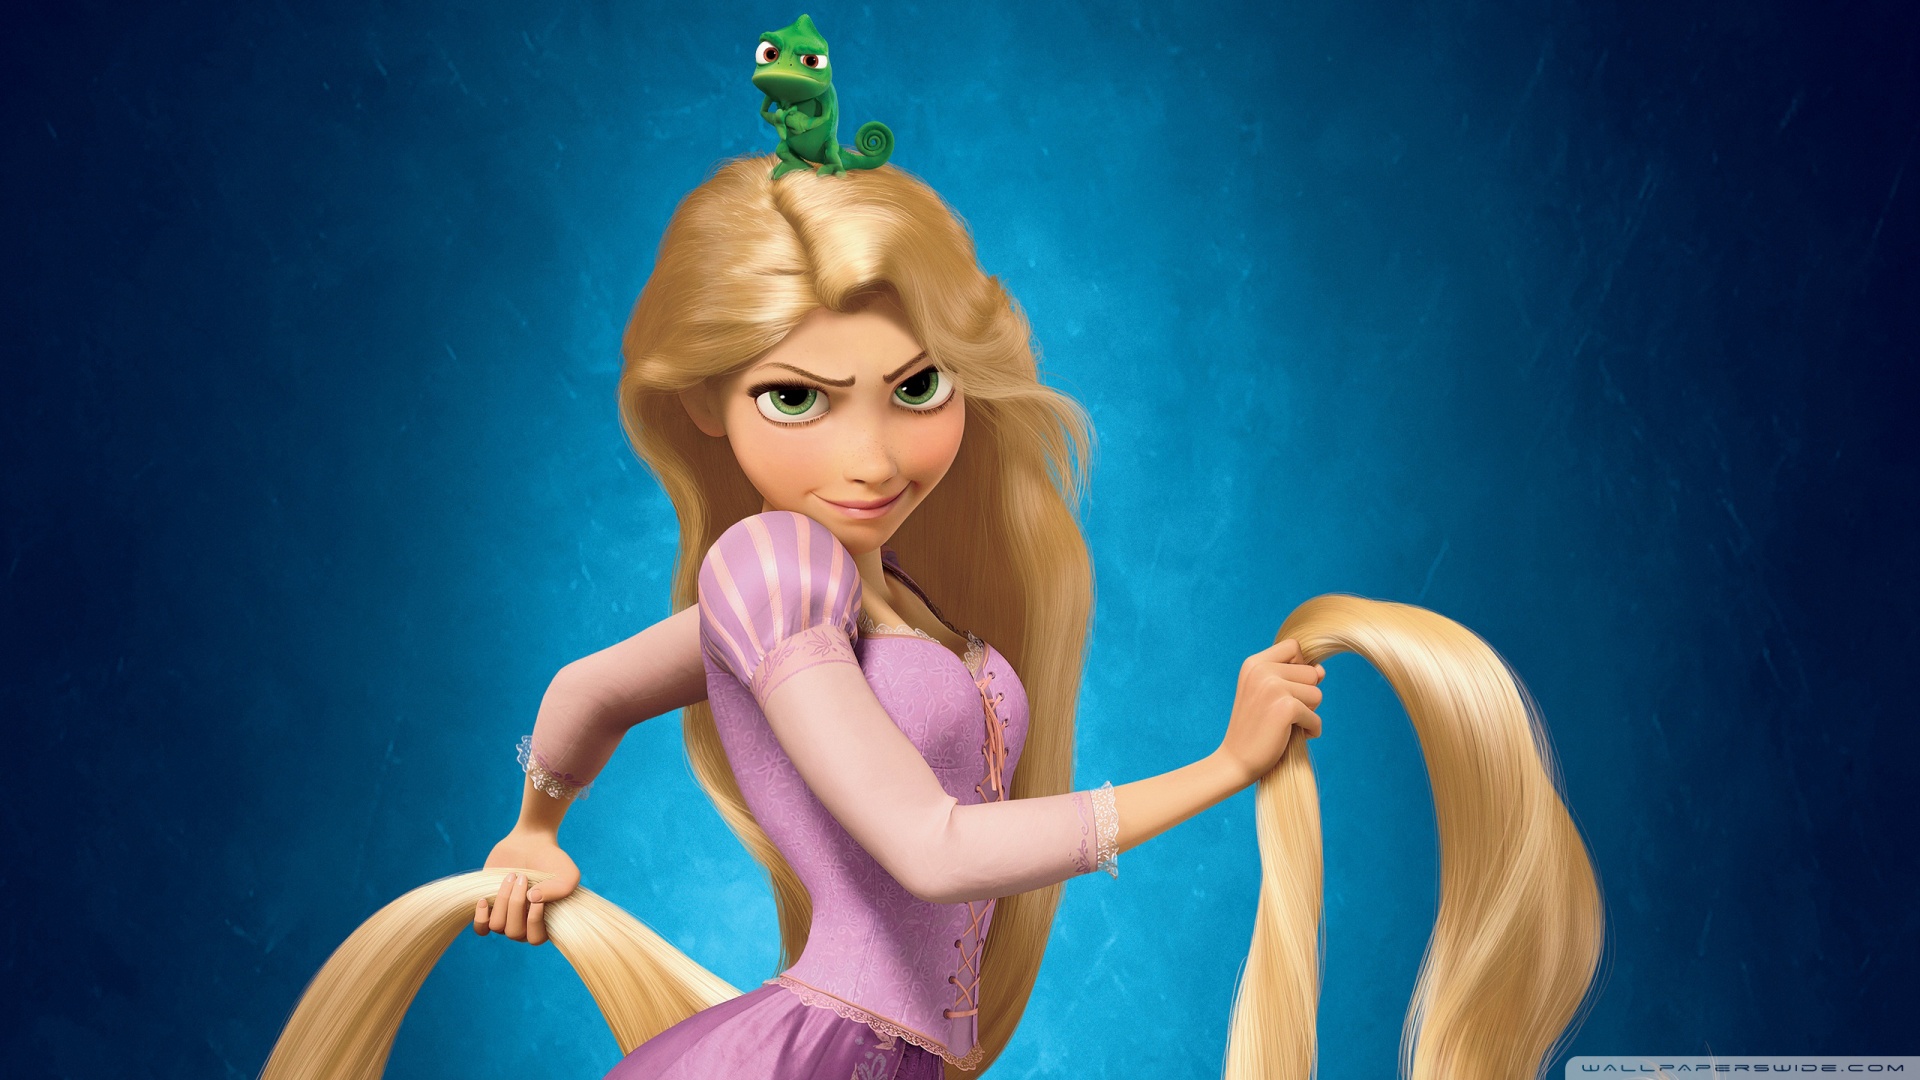 Rapunzel with her hair down - Rapunzel